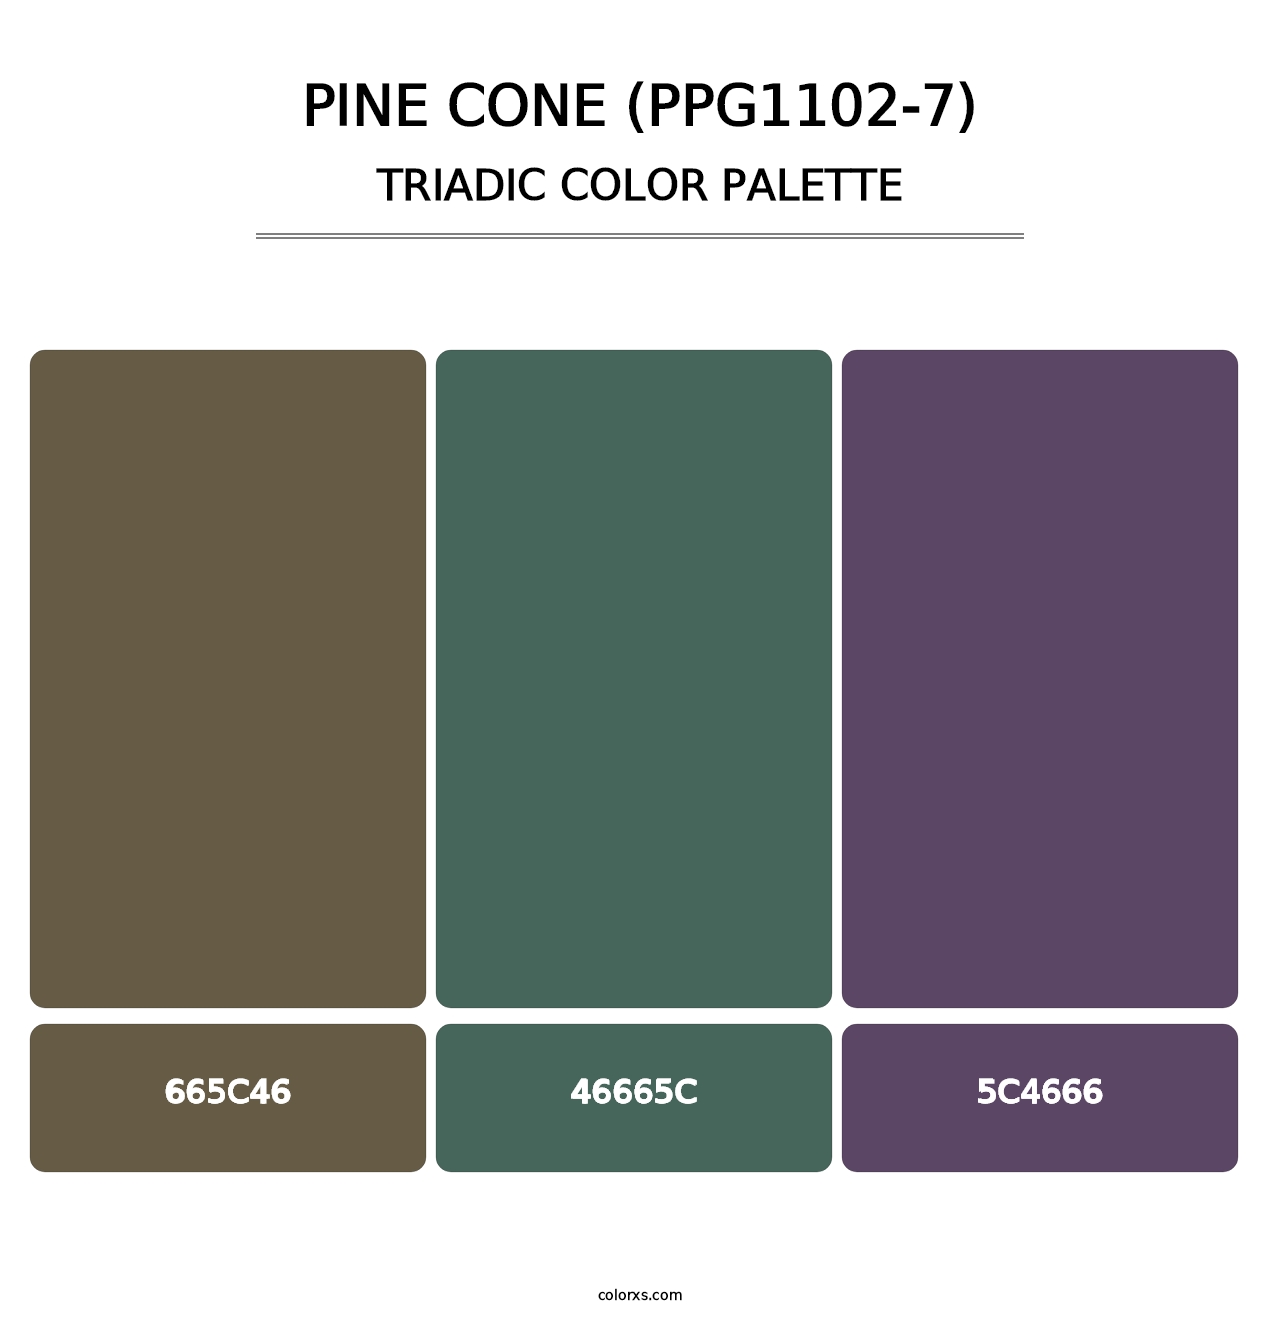 Pine Cone (PPG1102-7) - Triadic Color Palette